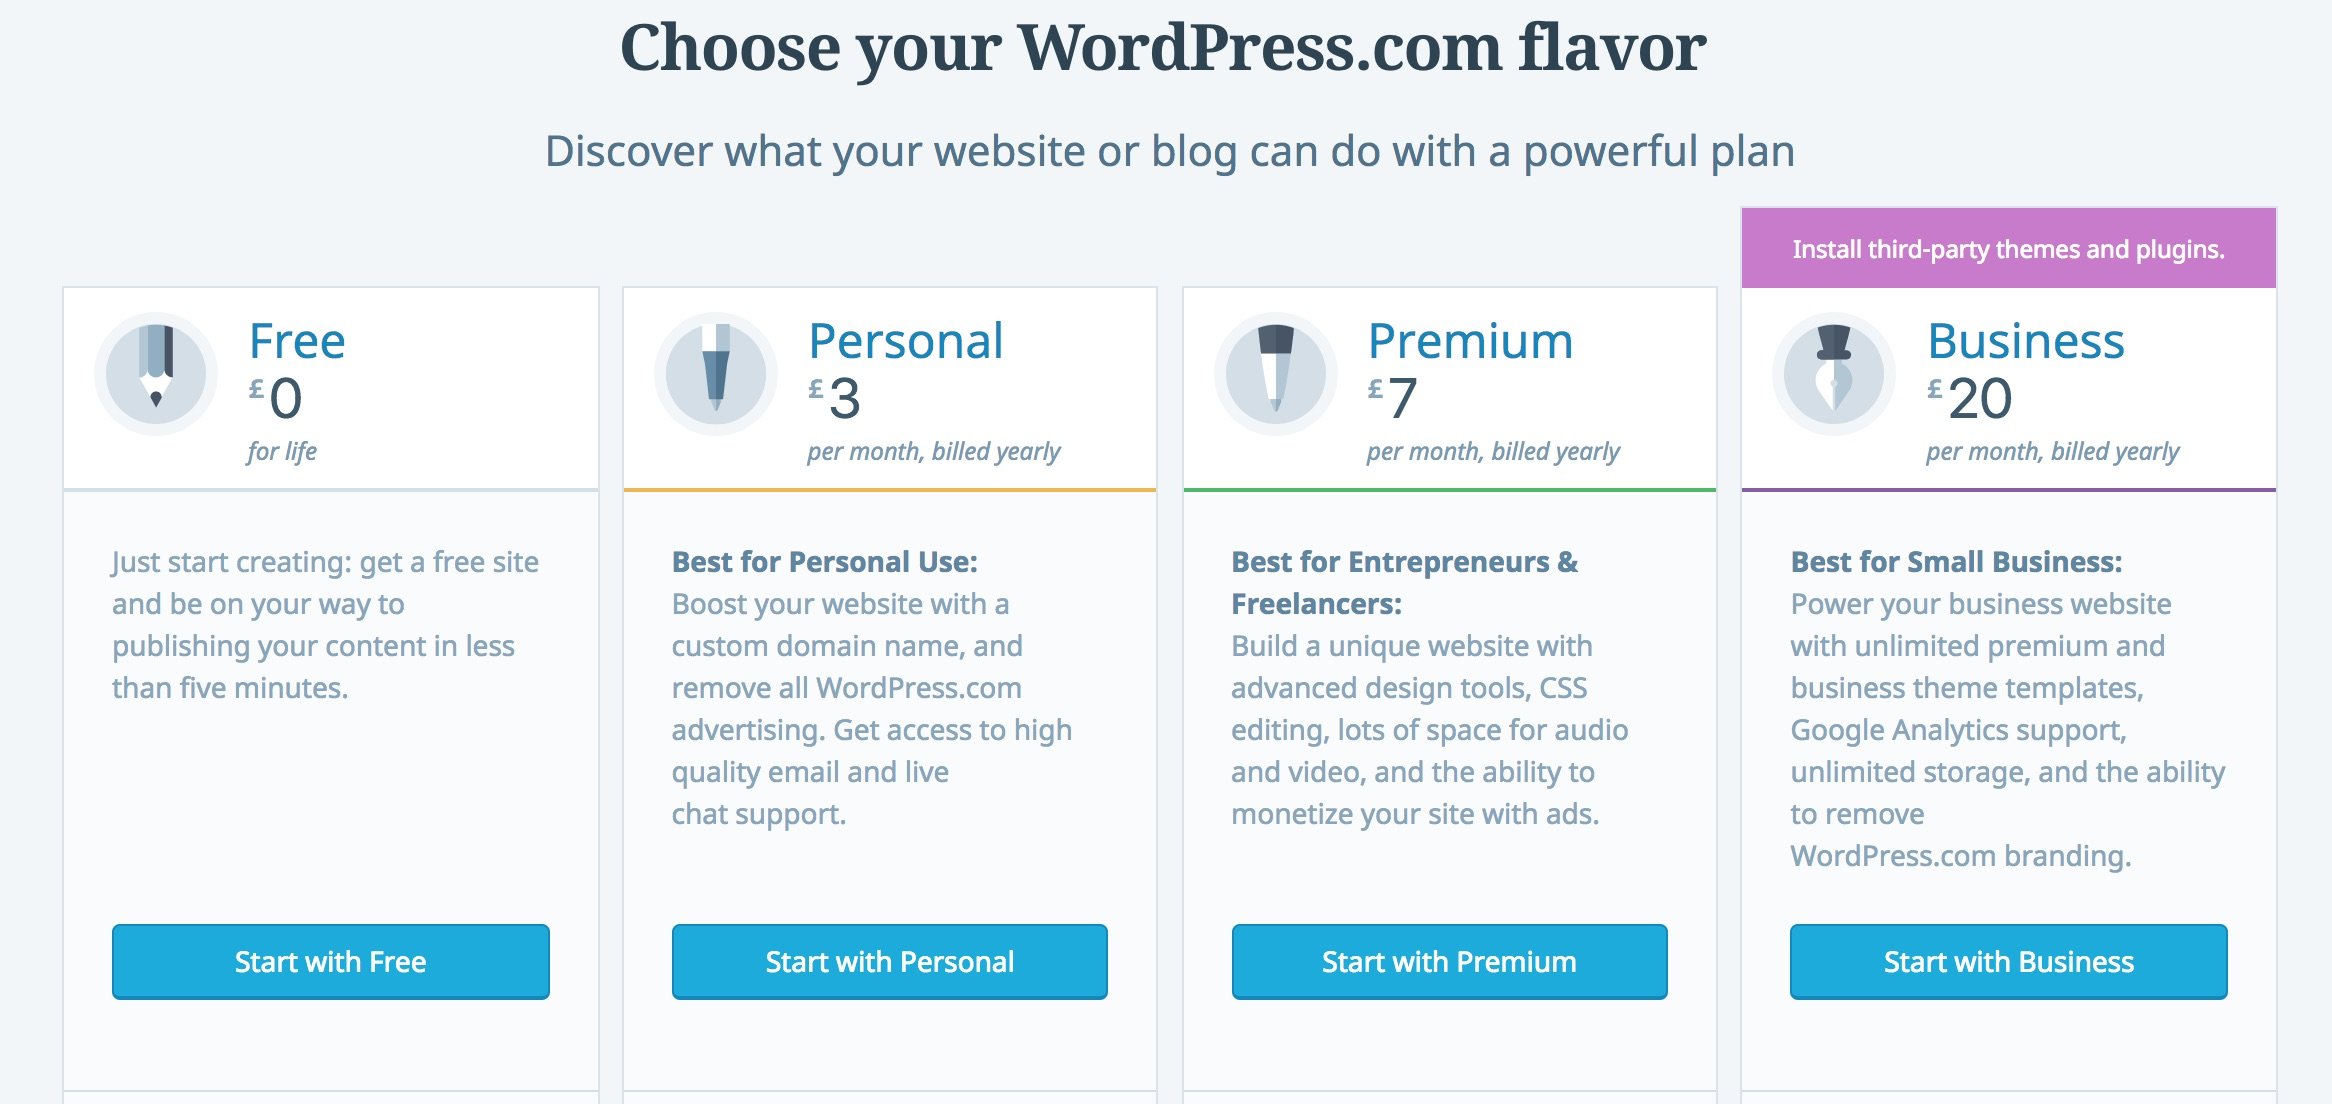 WordPress.com Pricing Plans